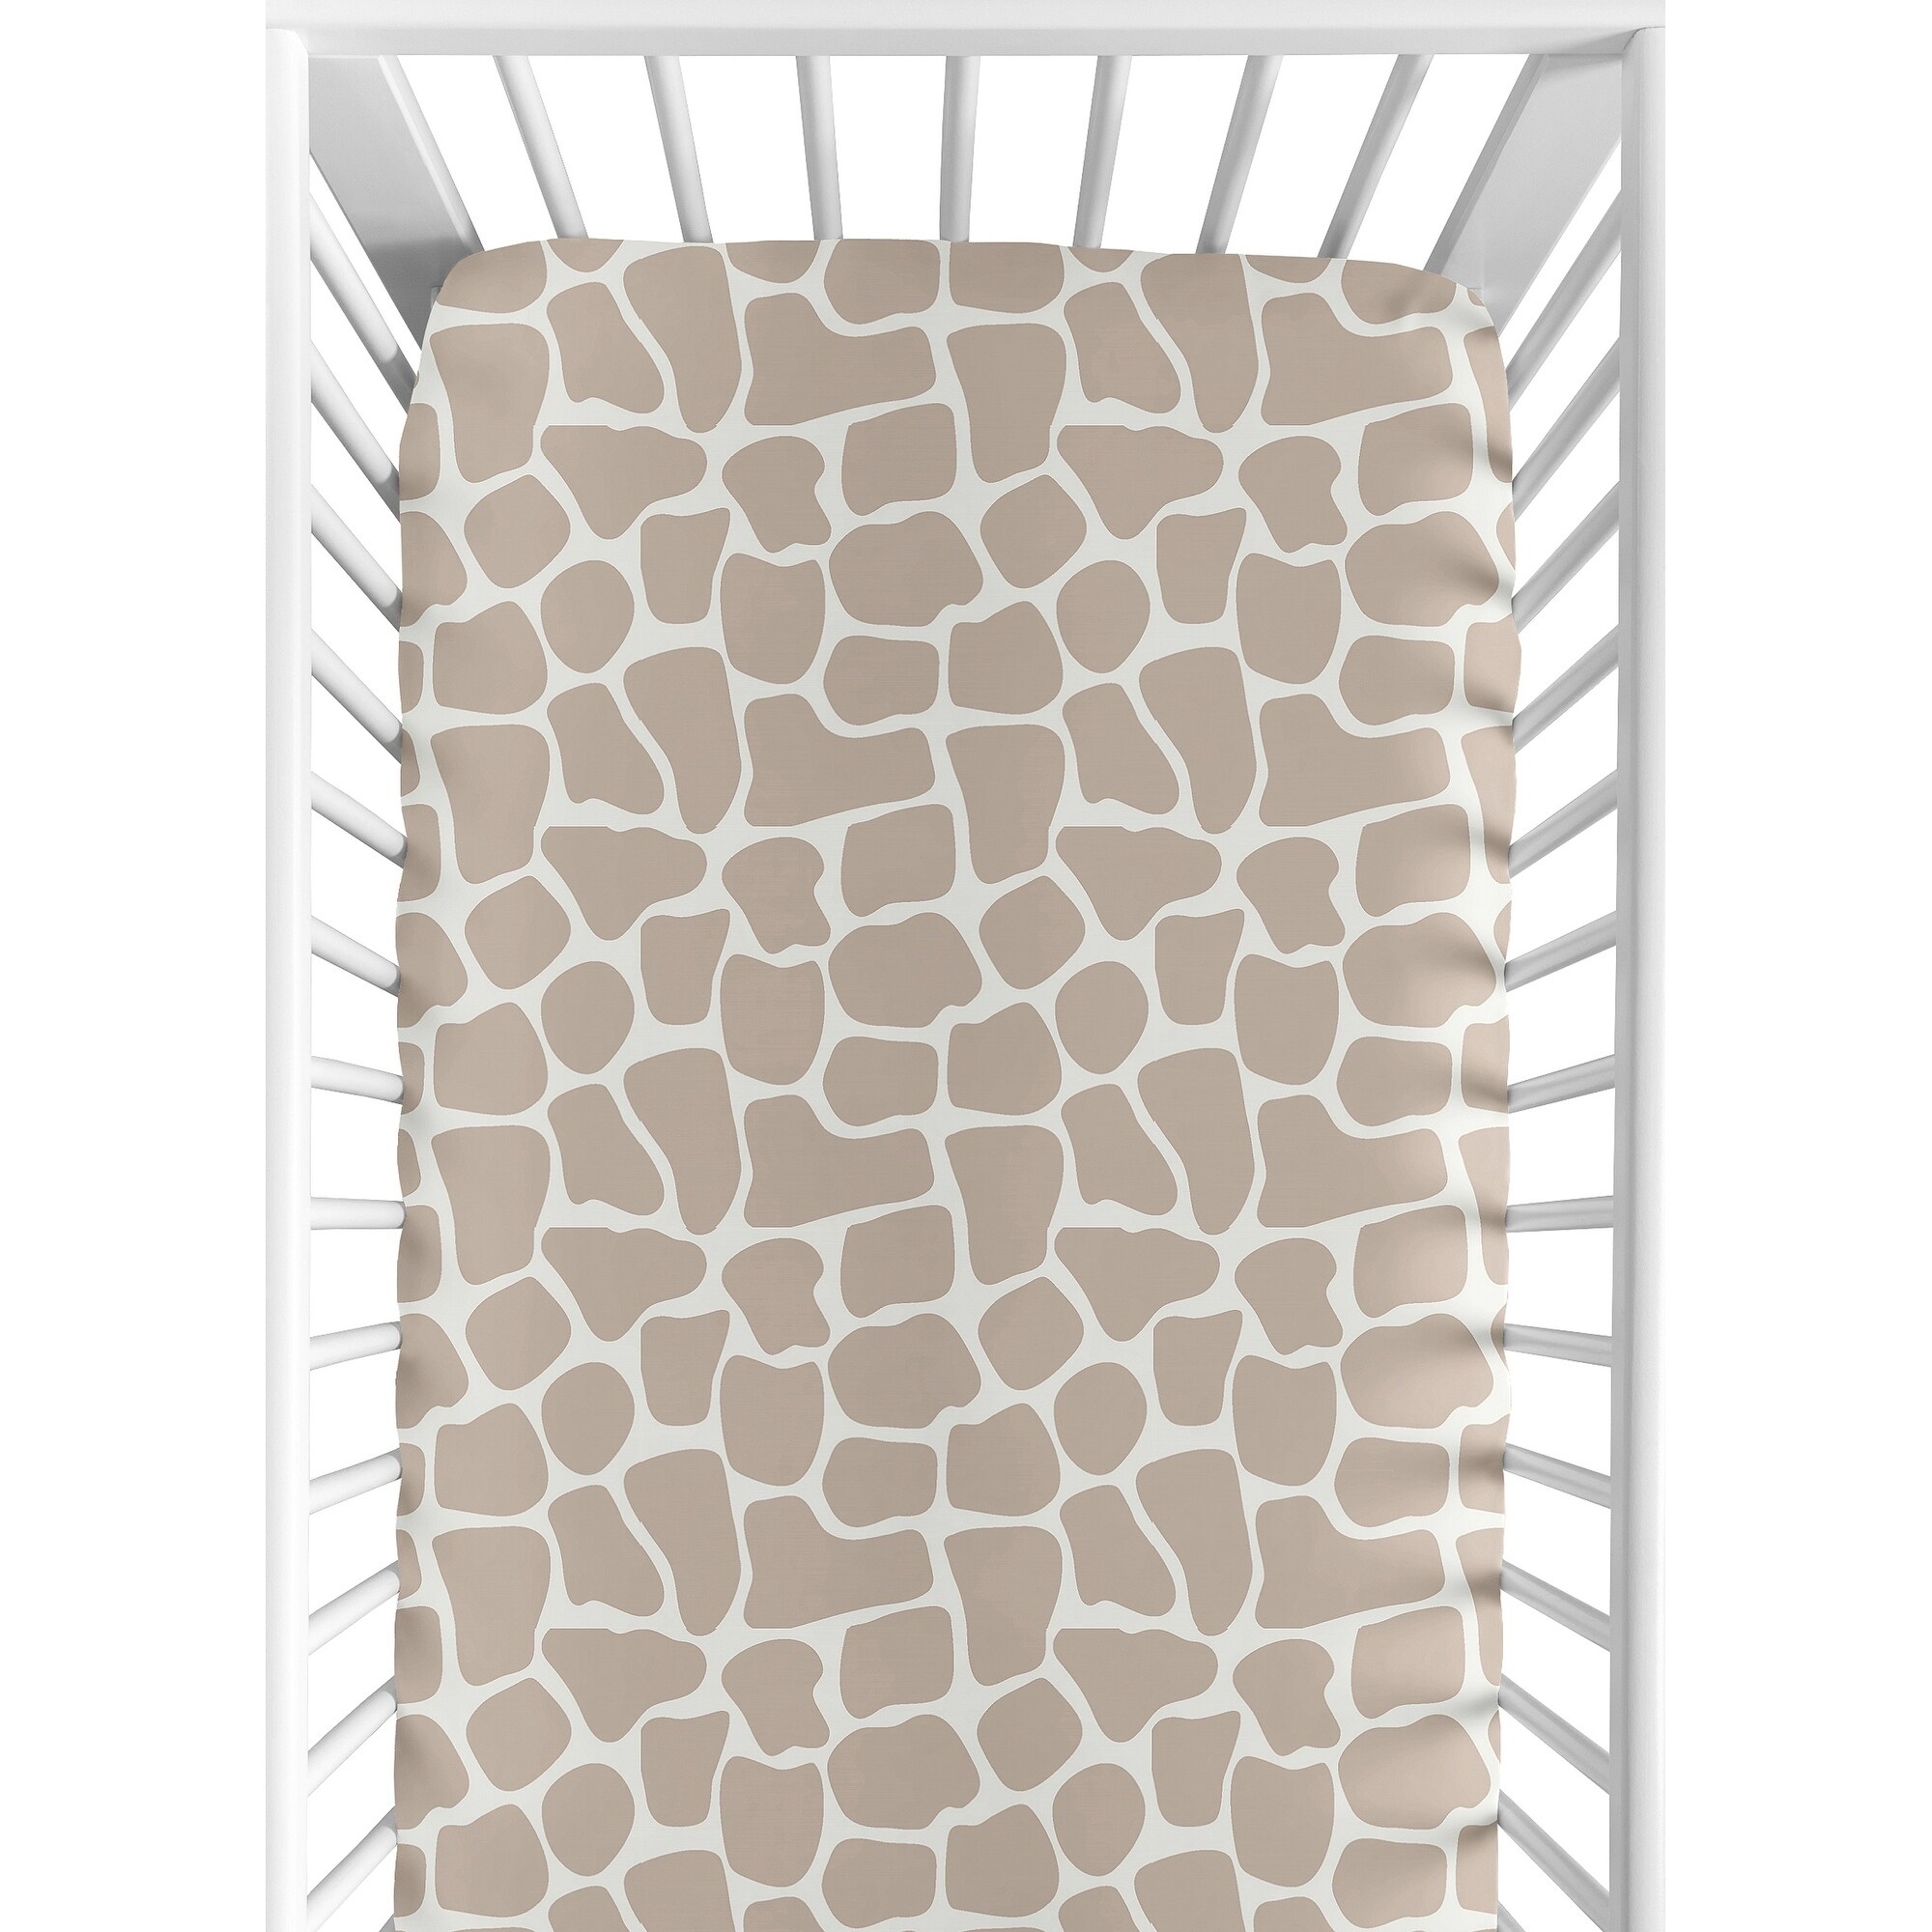 giraffe print crib sheet